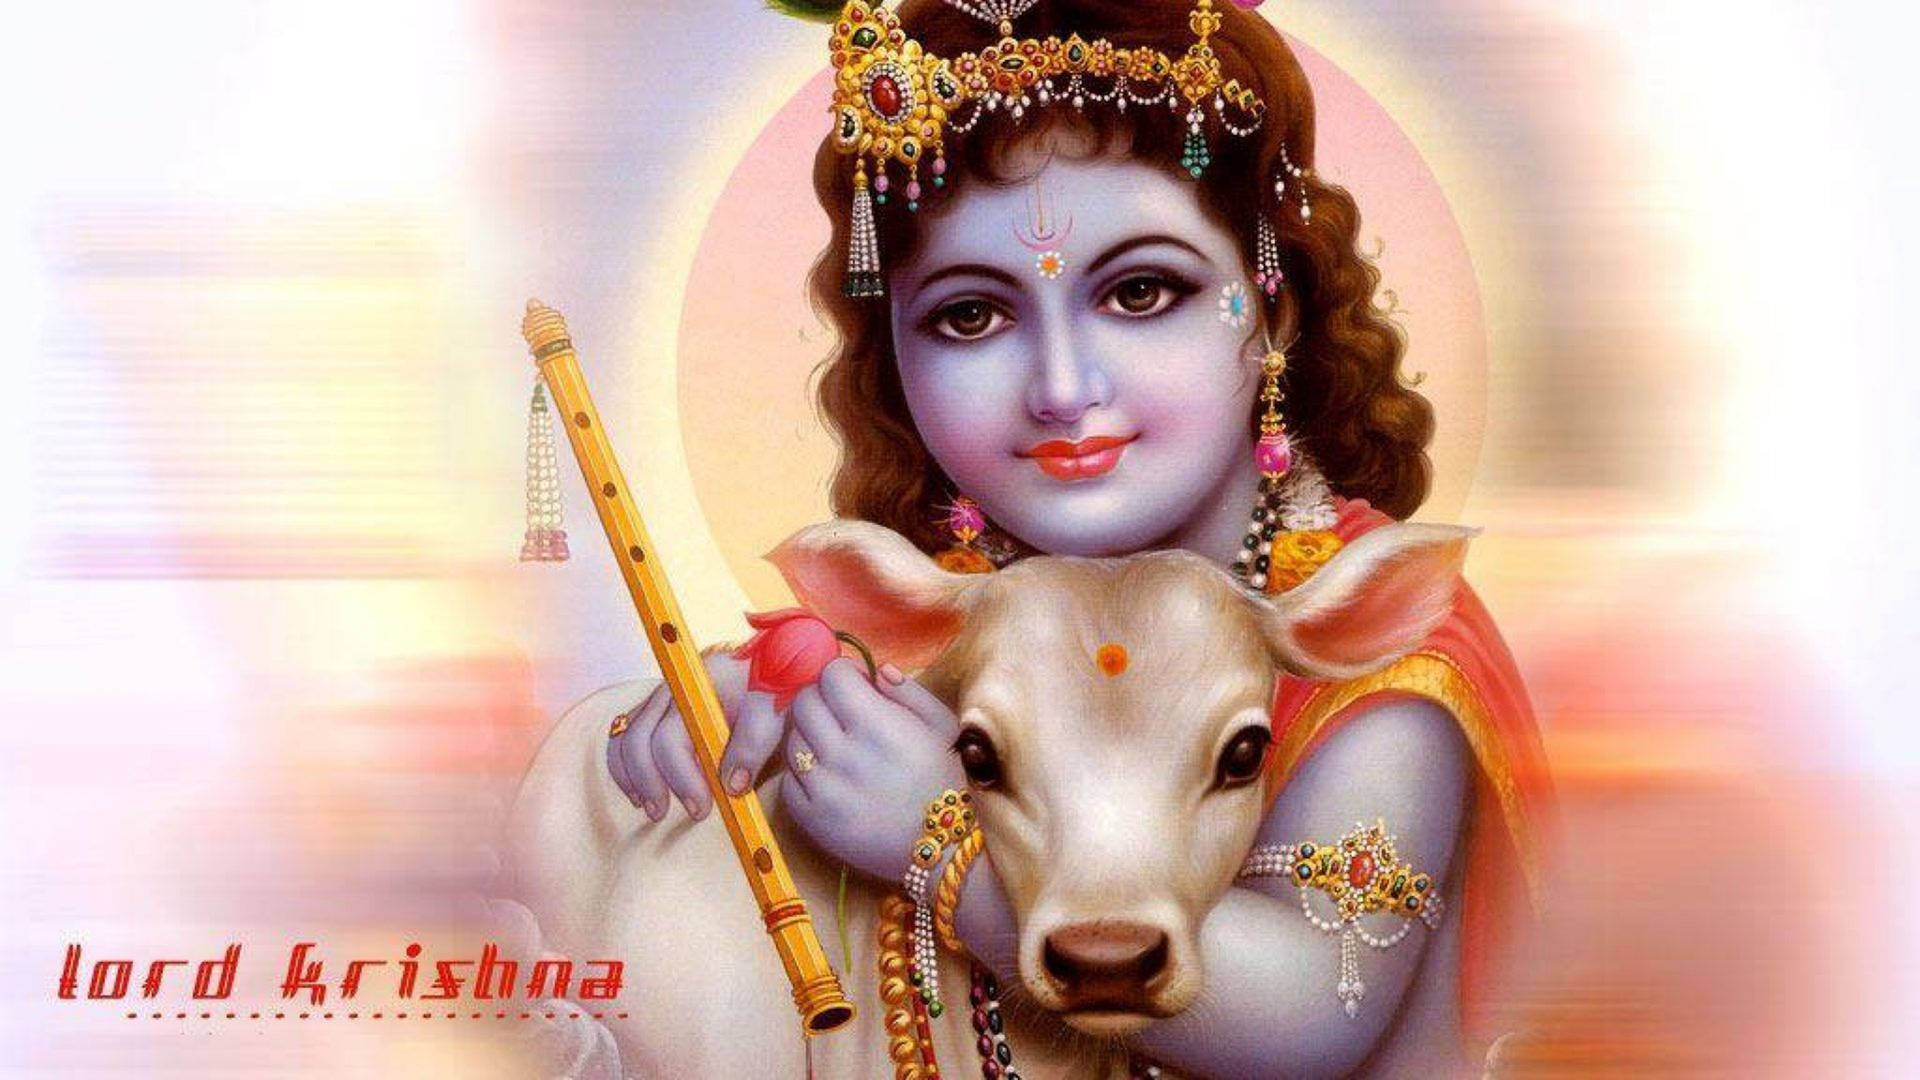 Captivating 4k Image Of Lord Krishna With Authentic Navaratna Jewelry